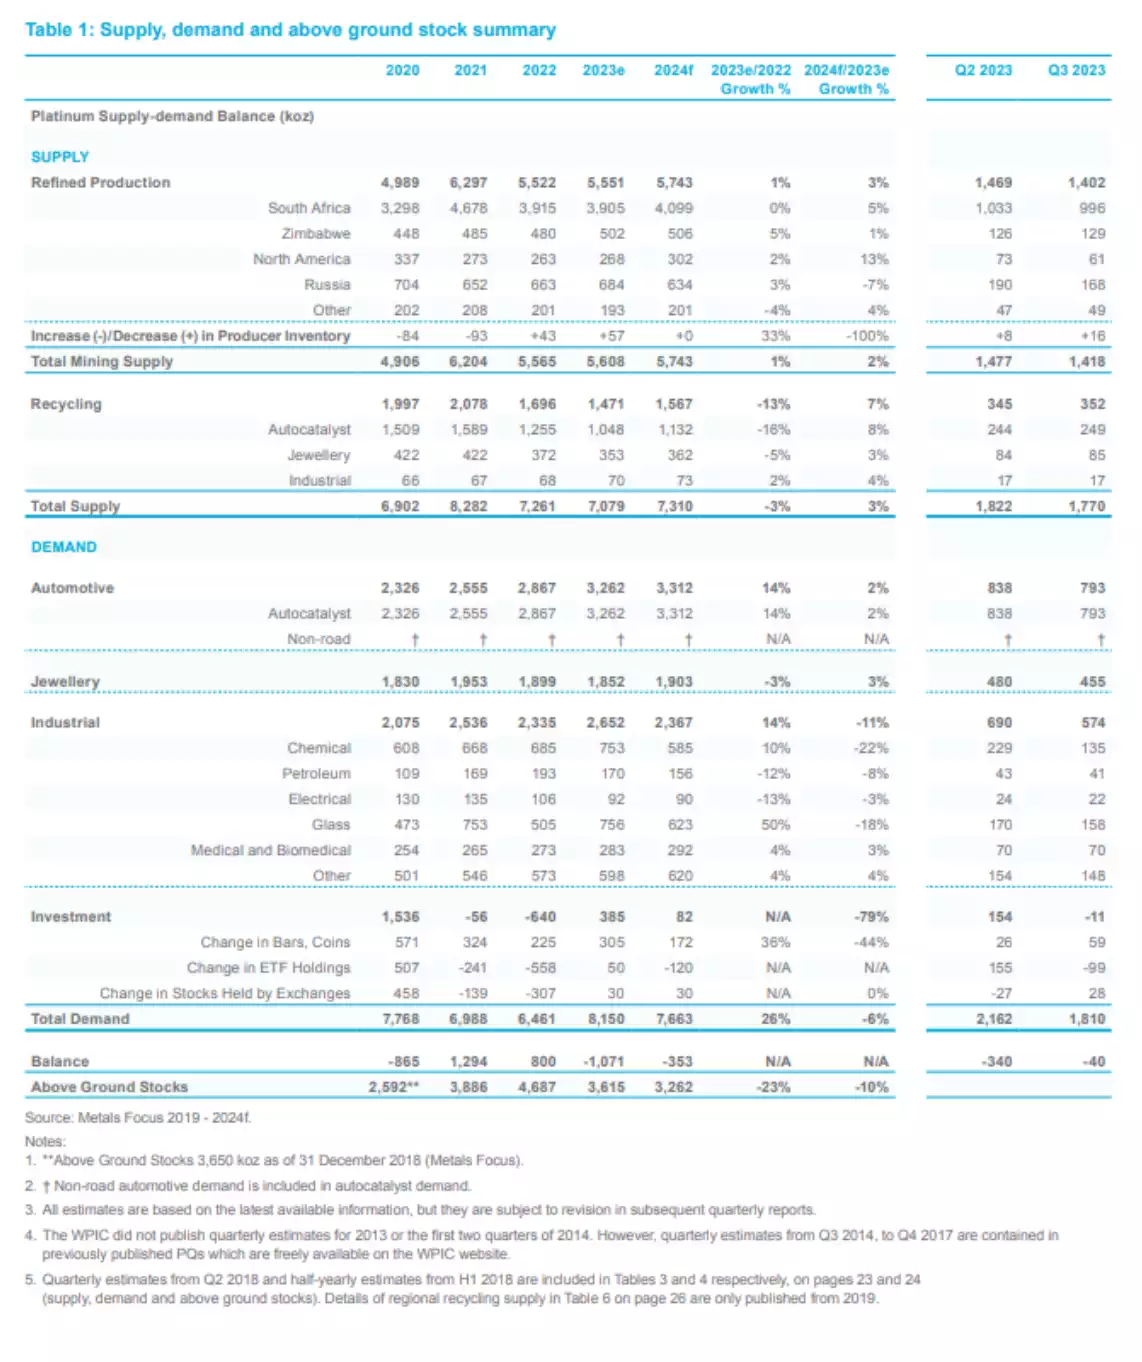 Platinum supply, demand, and above ground stock summary